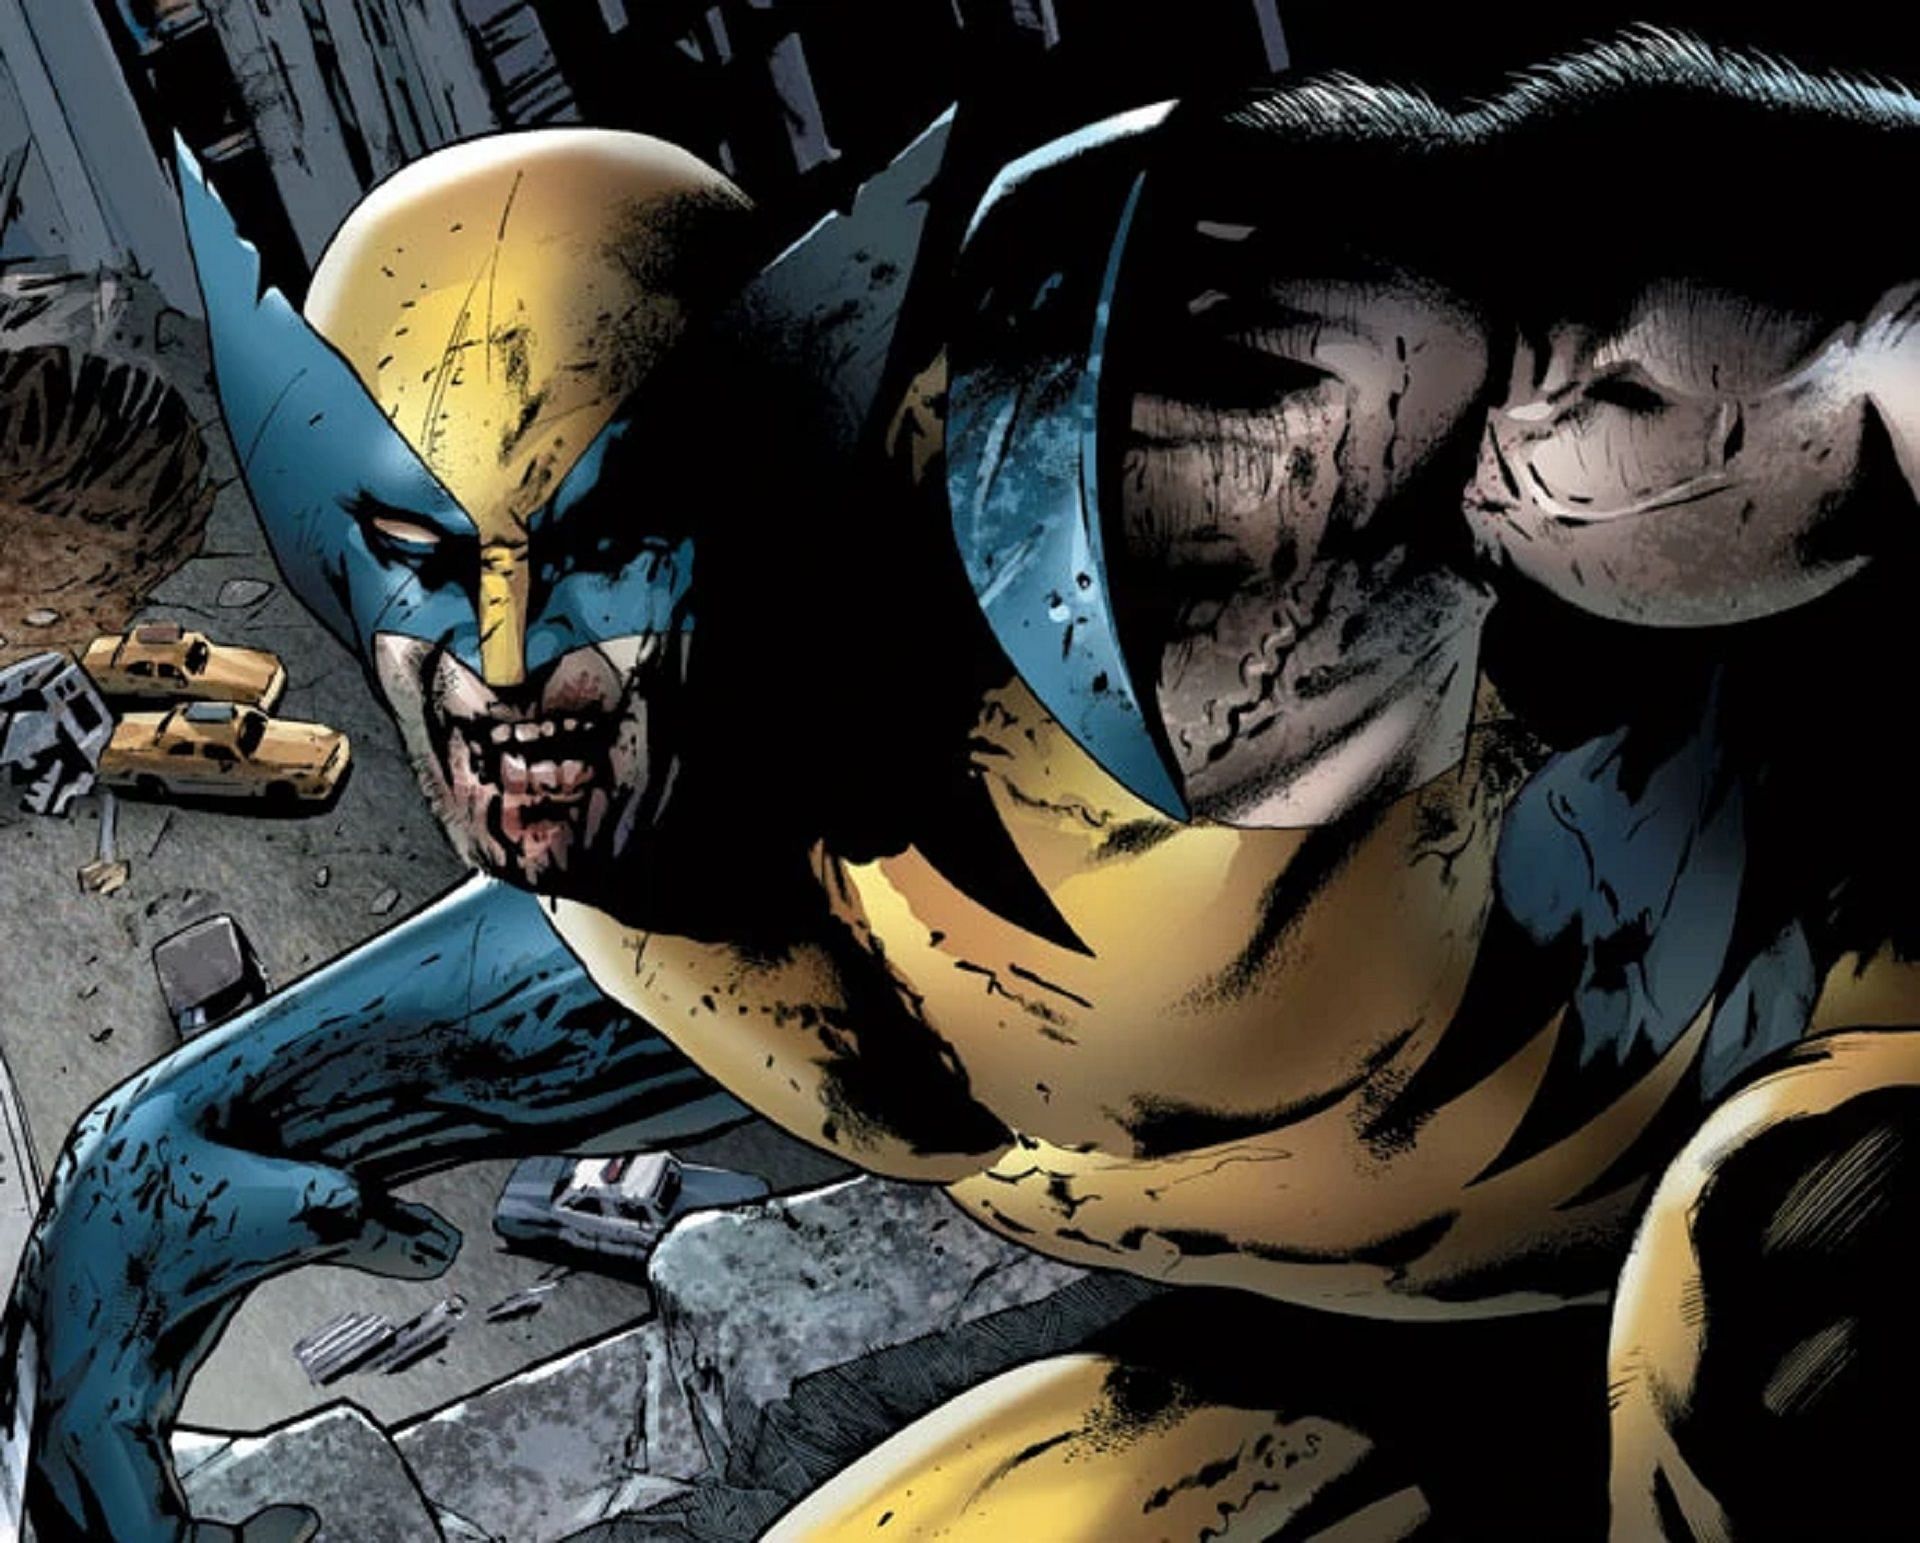 Is Daken stronger than Wolverine?